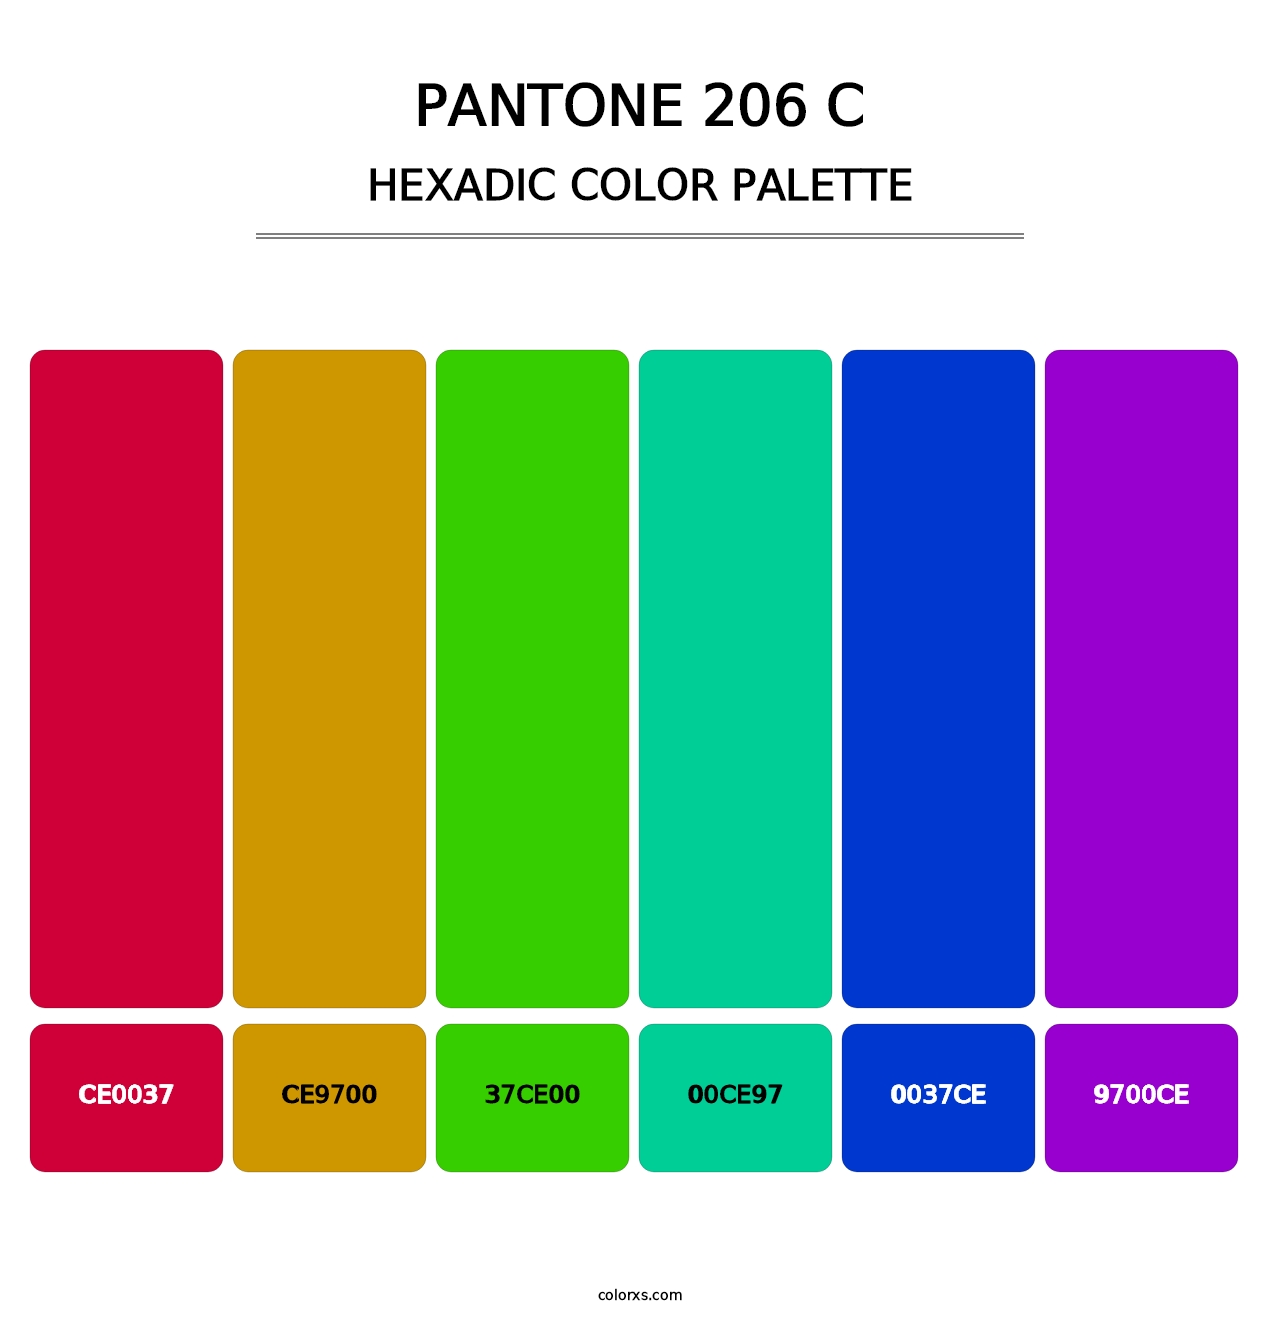 PANTONE 206 C - Hexadic Color Palette